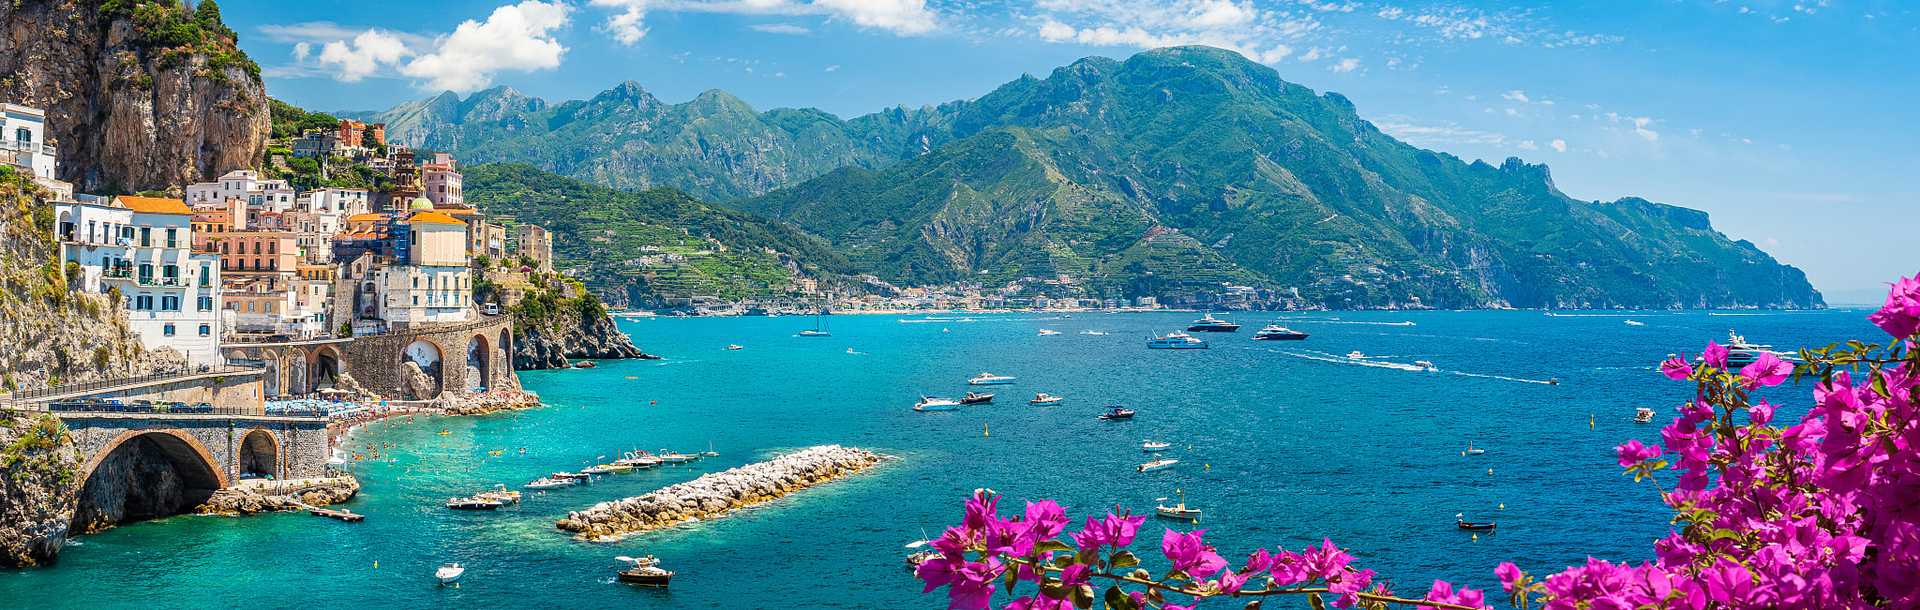 View of Atrani on the Amalfi Coast in the Campania region of south-western Italy.